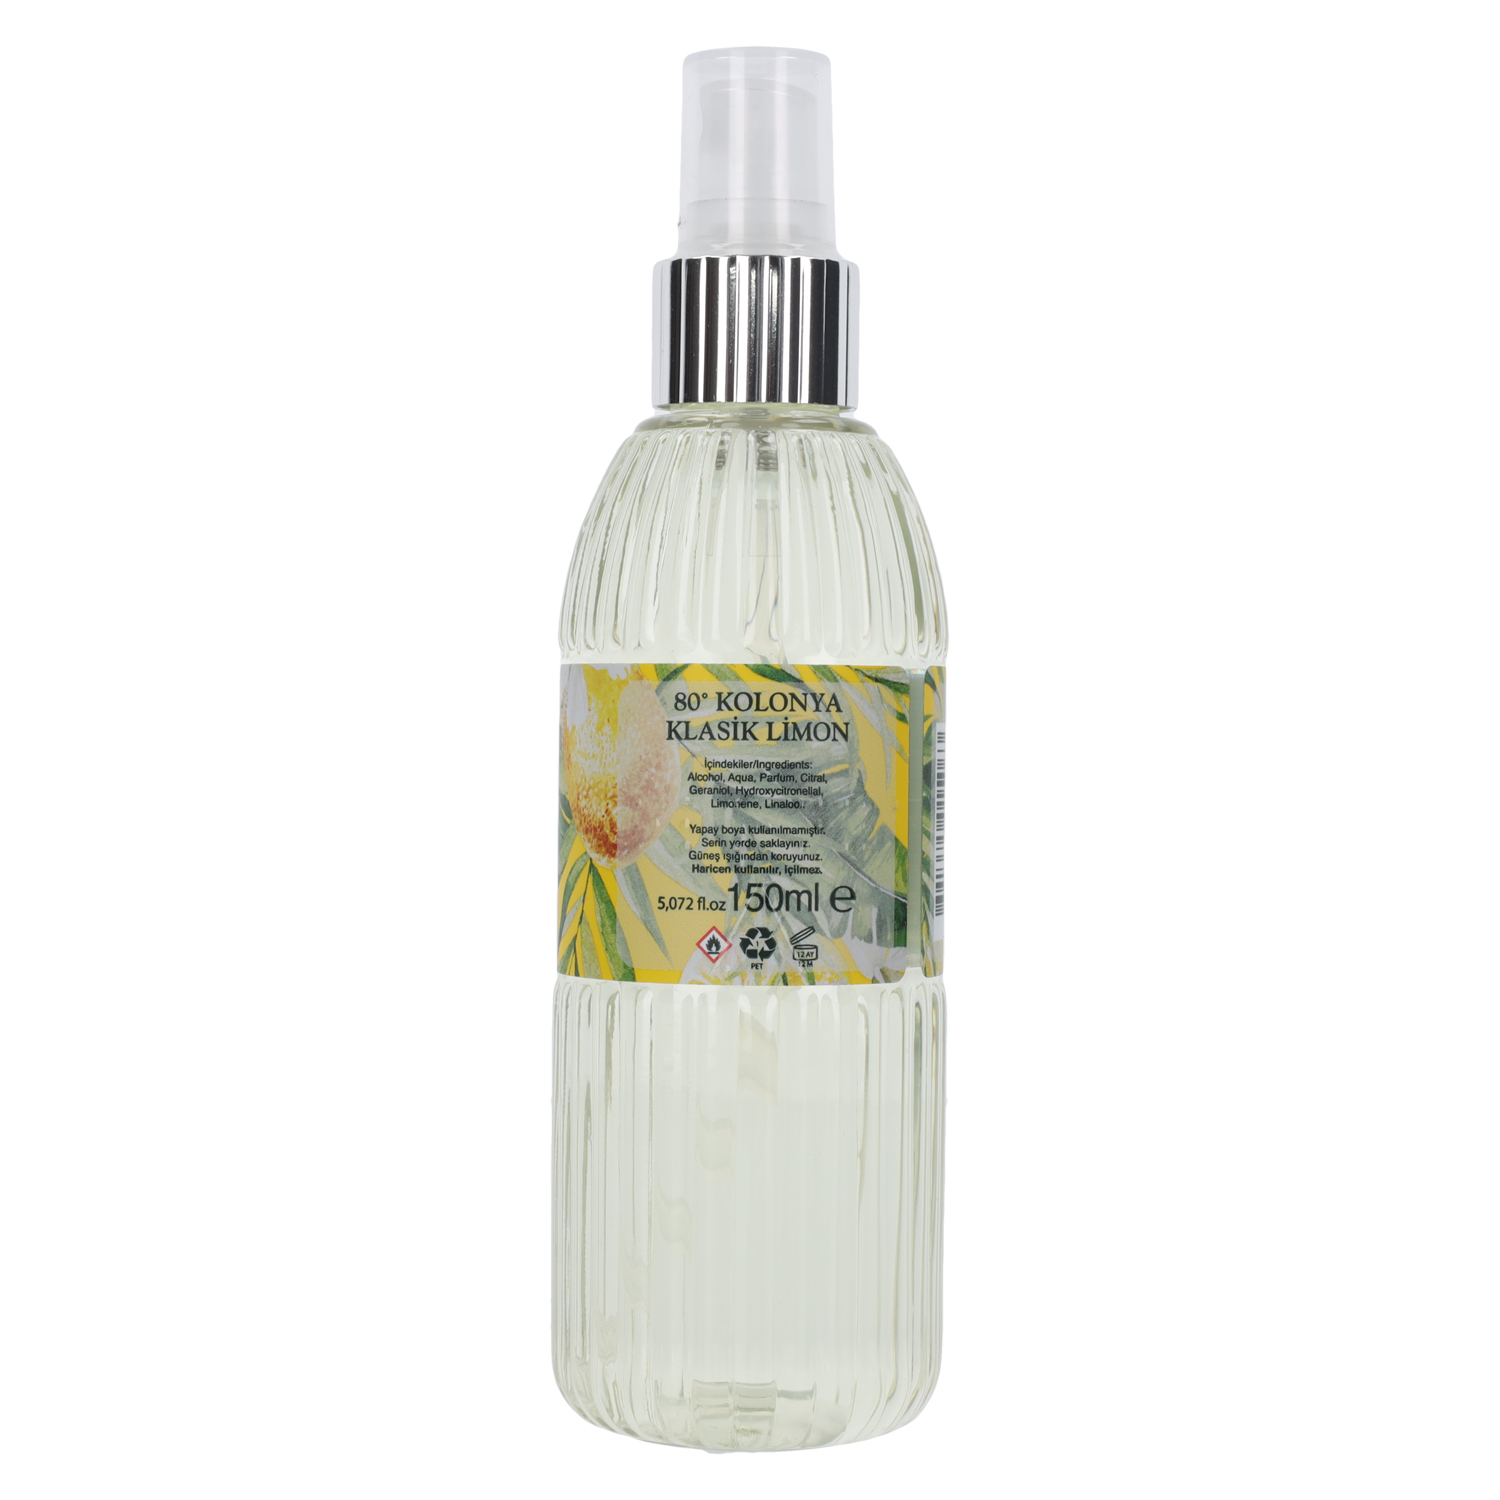 Kolonya Limon (Lemon) fragrancy 150 ml Spray